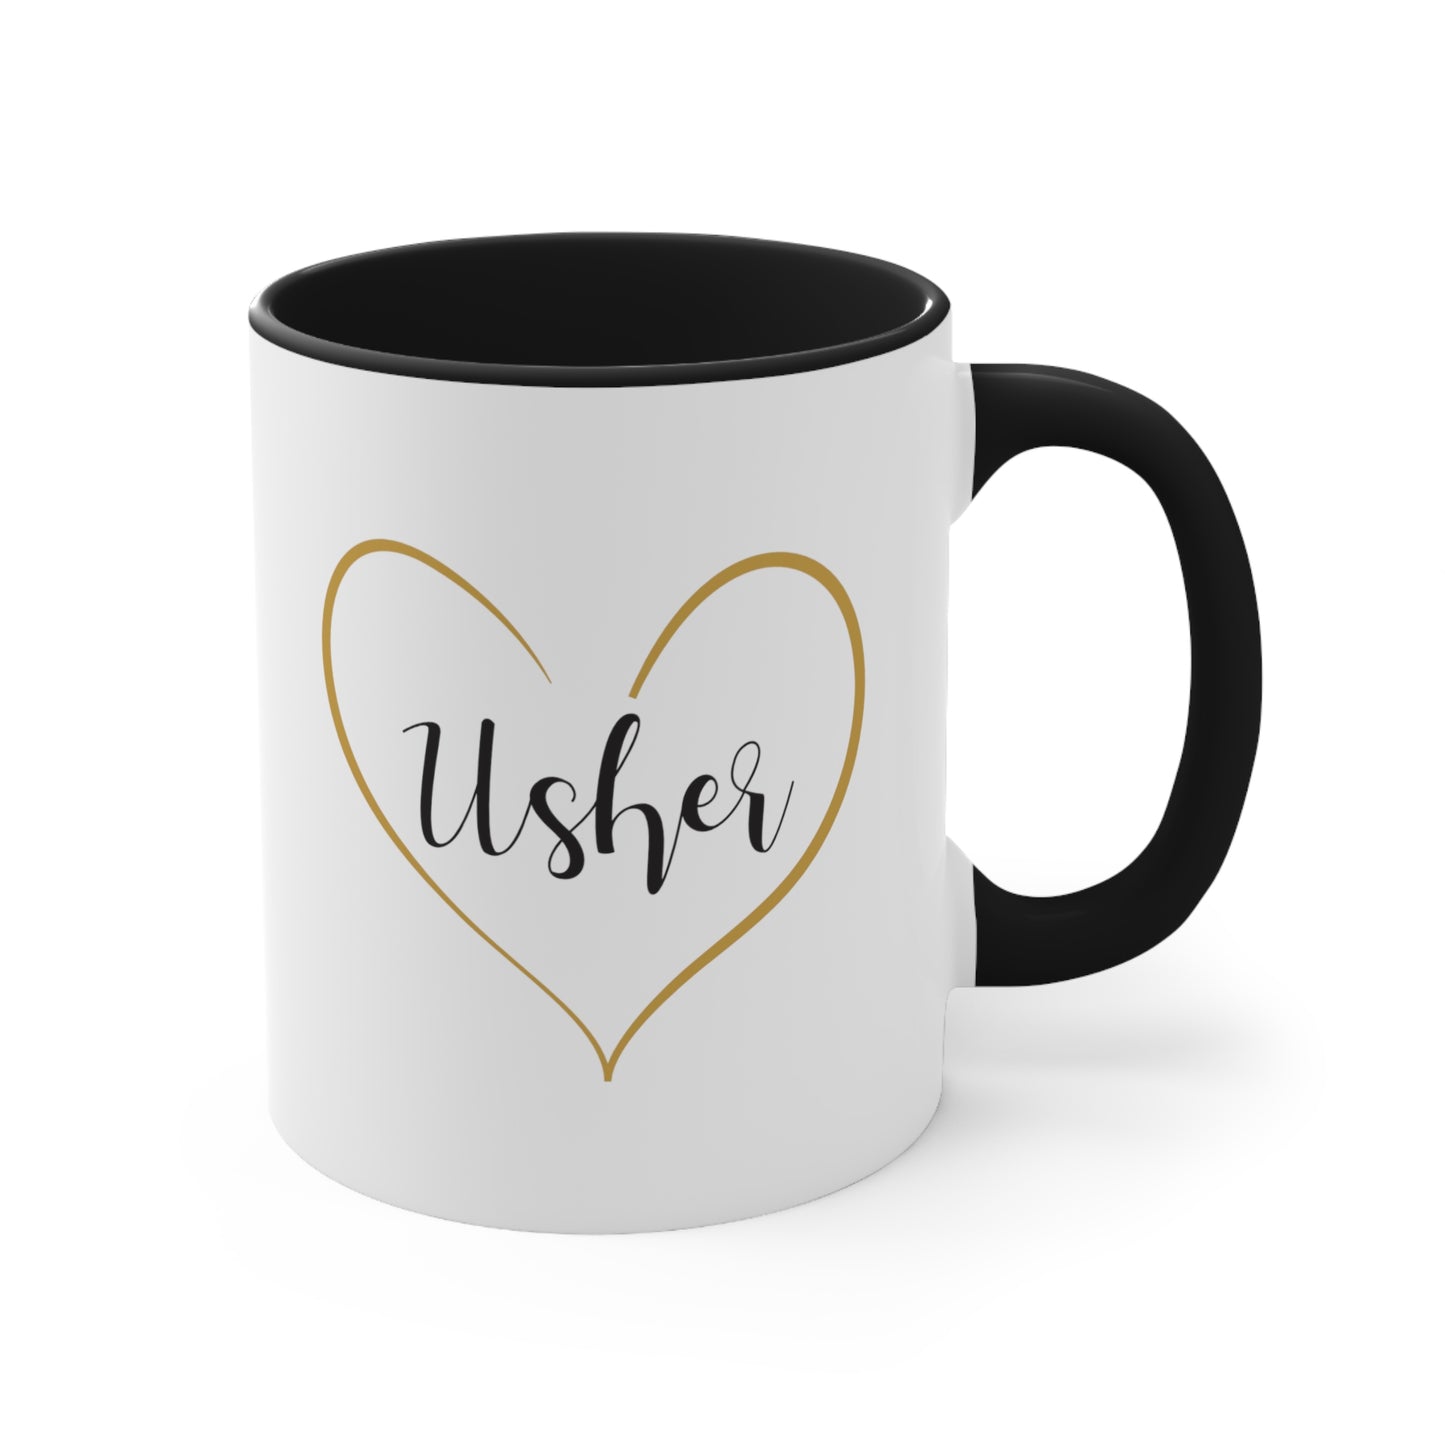 Usher Coffee Mug - Double Sided Black Accent Ceramic 11oz by TheGlassyLass.com